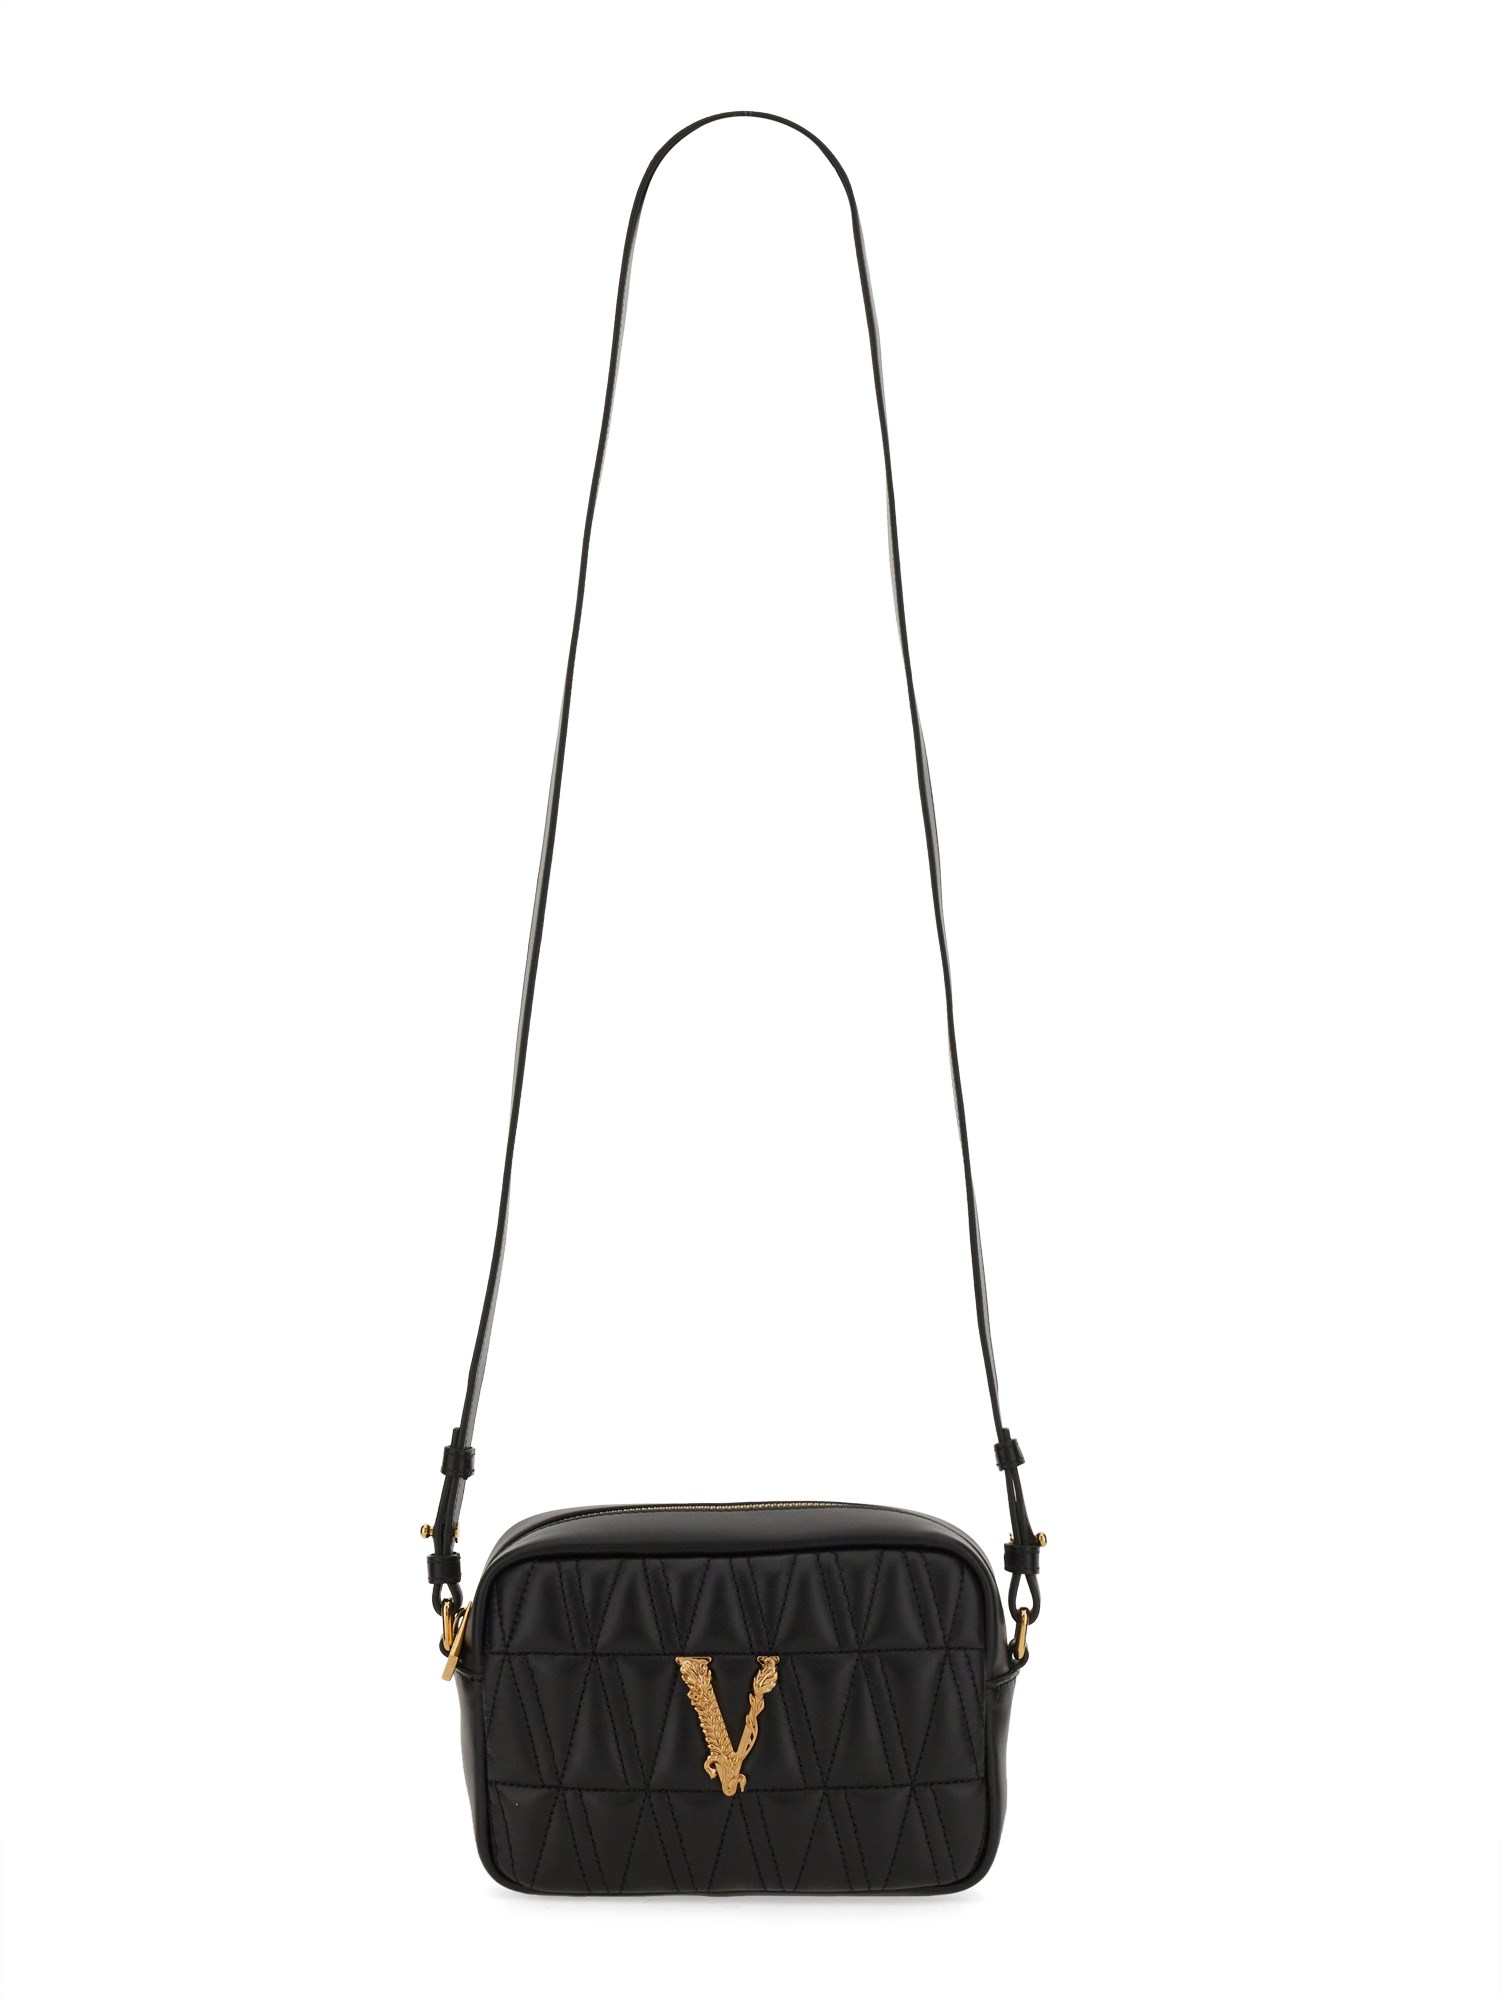 Versace versace "virtus" shoulder bag